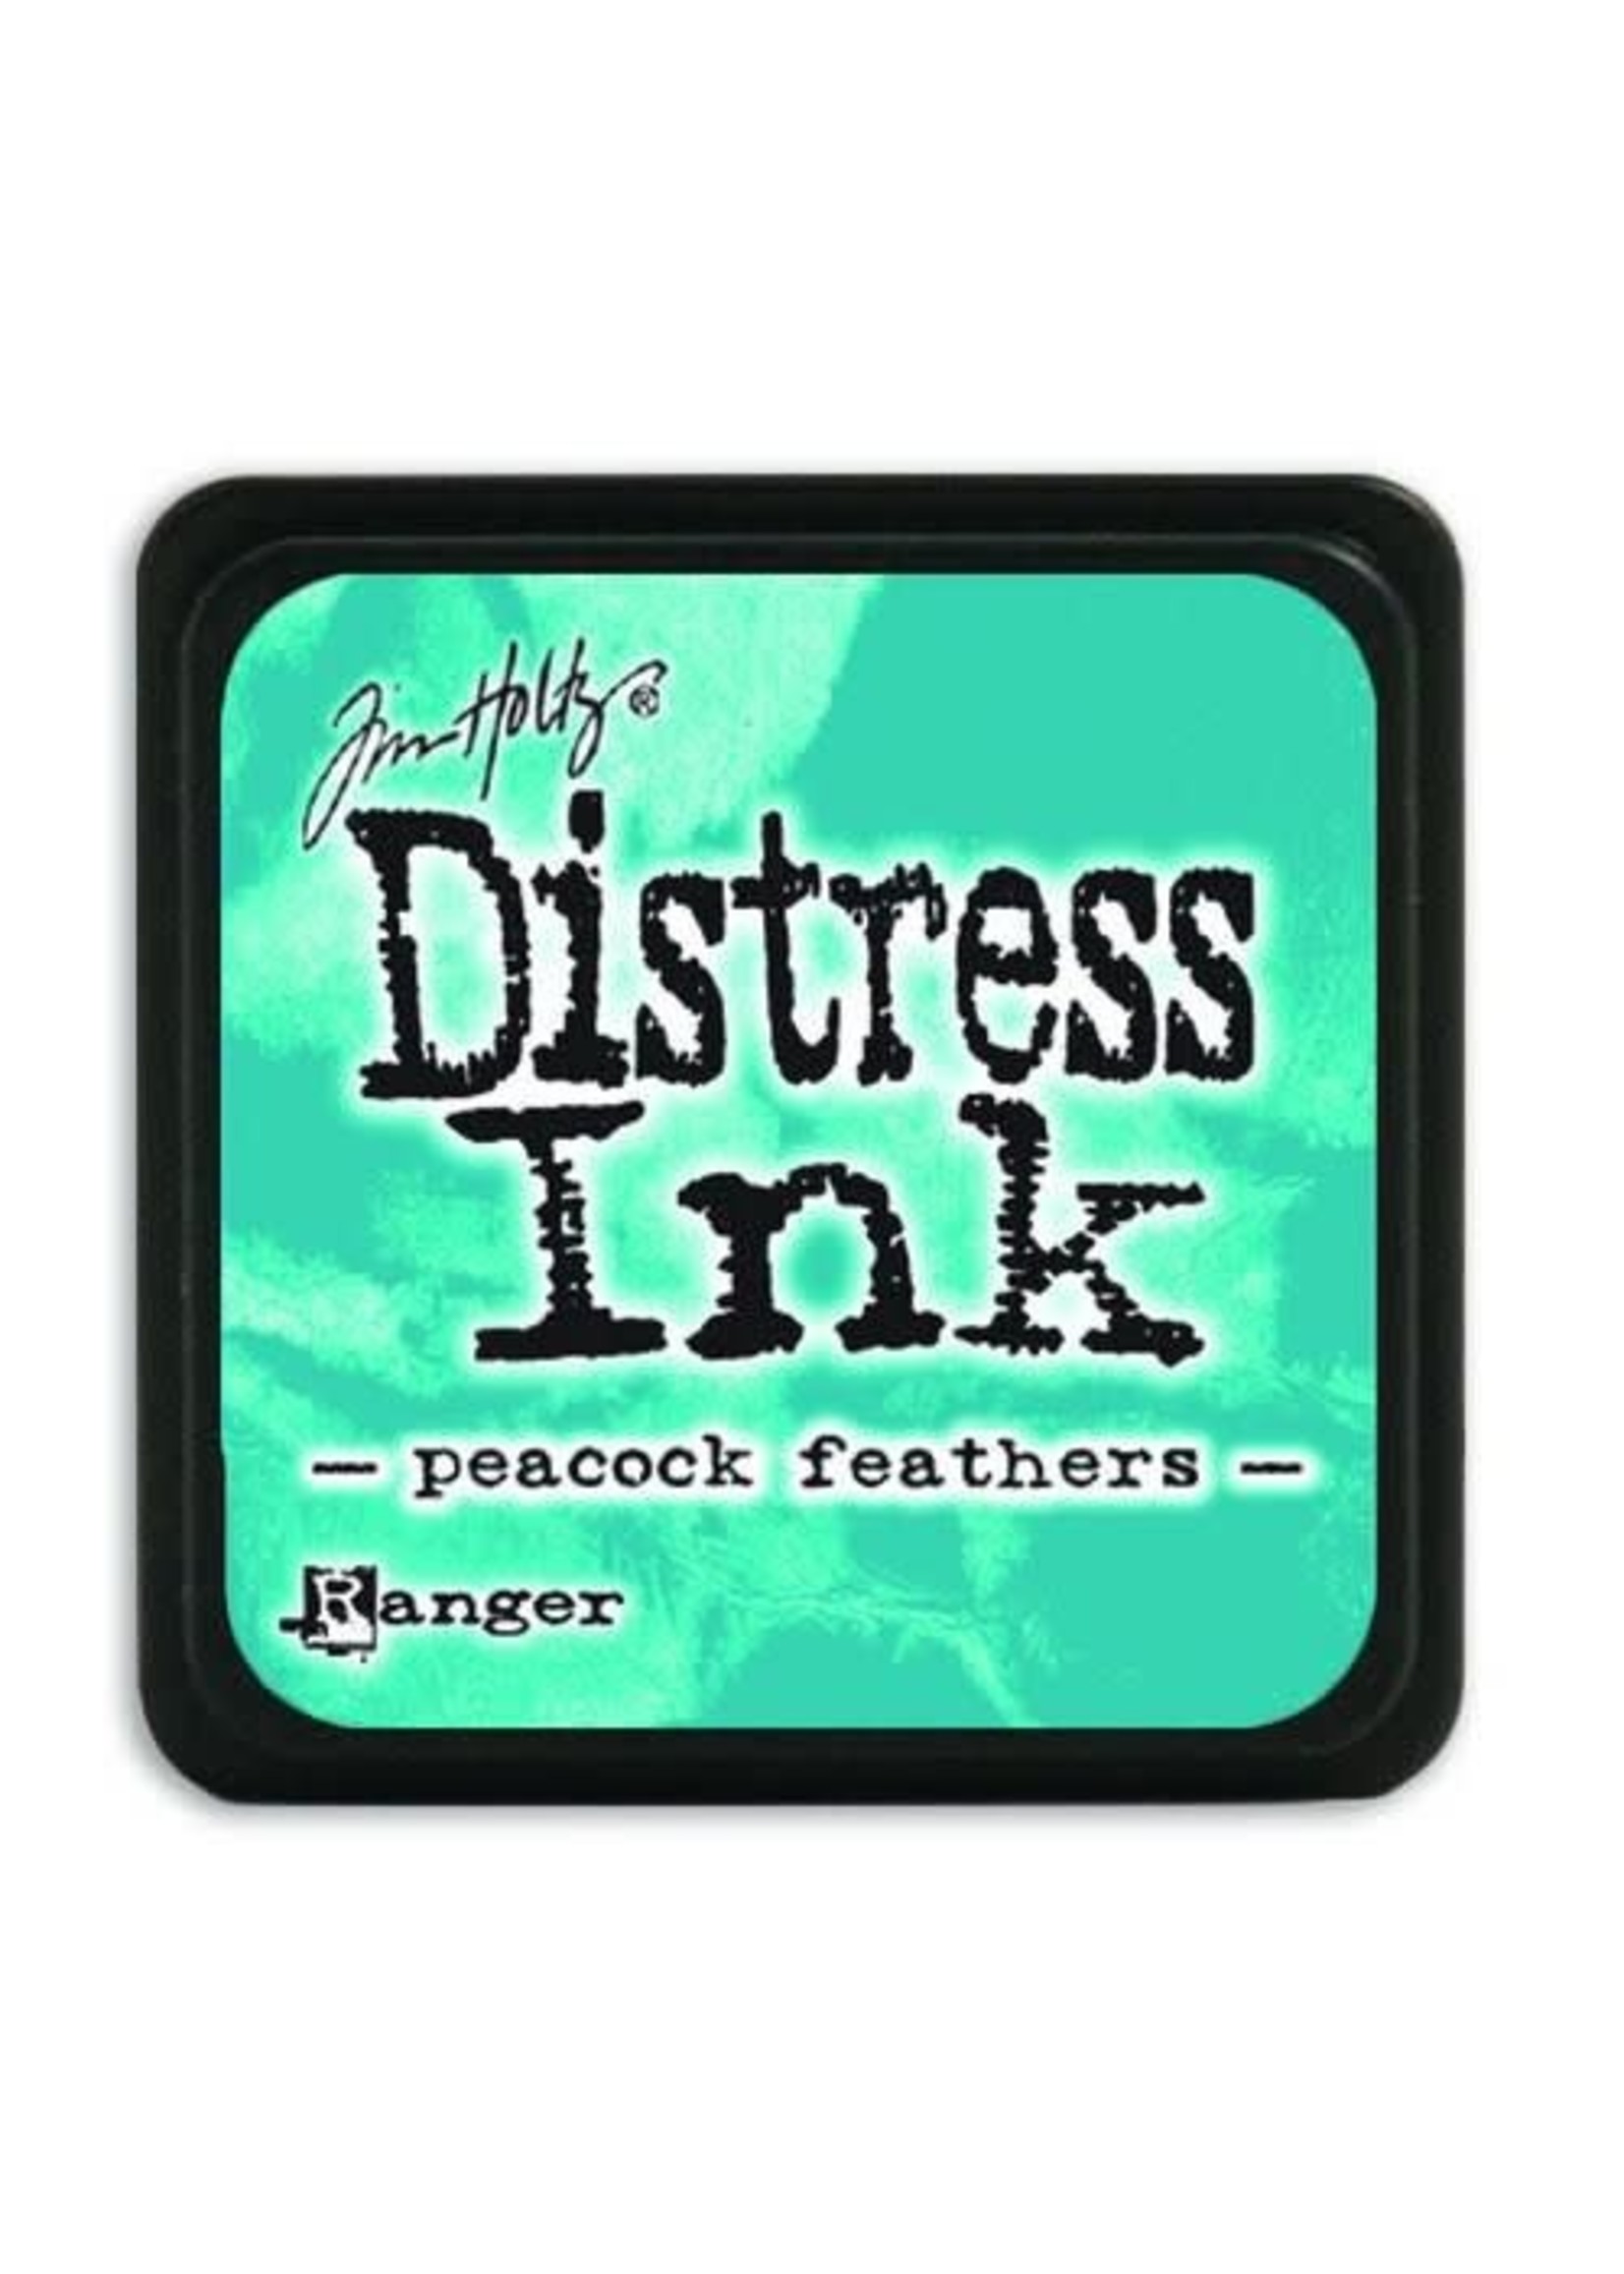 Ik was verrast conjunctie Chemie Distress ink mini pad - Peacock Feathers - Do-it creatief